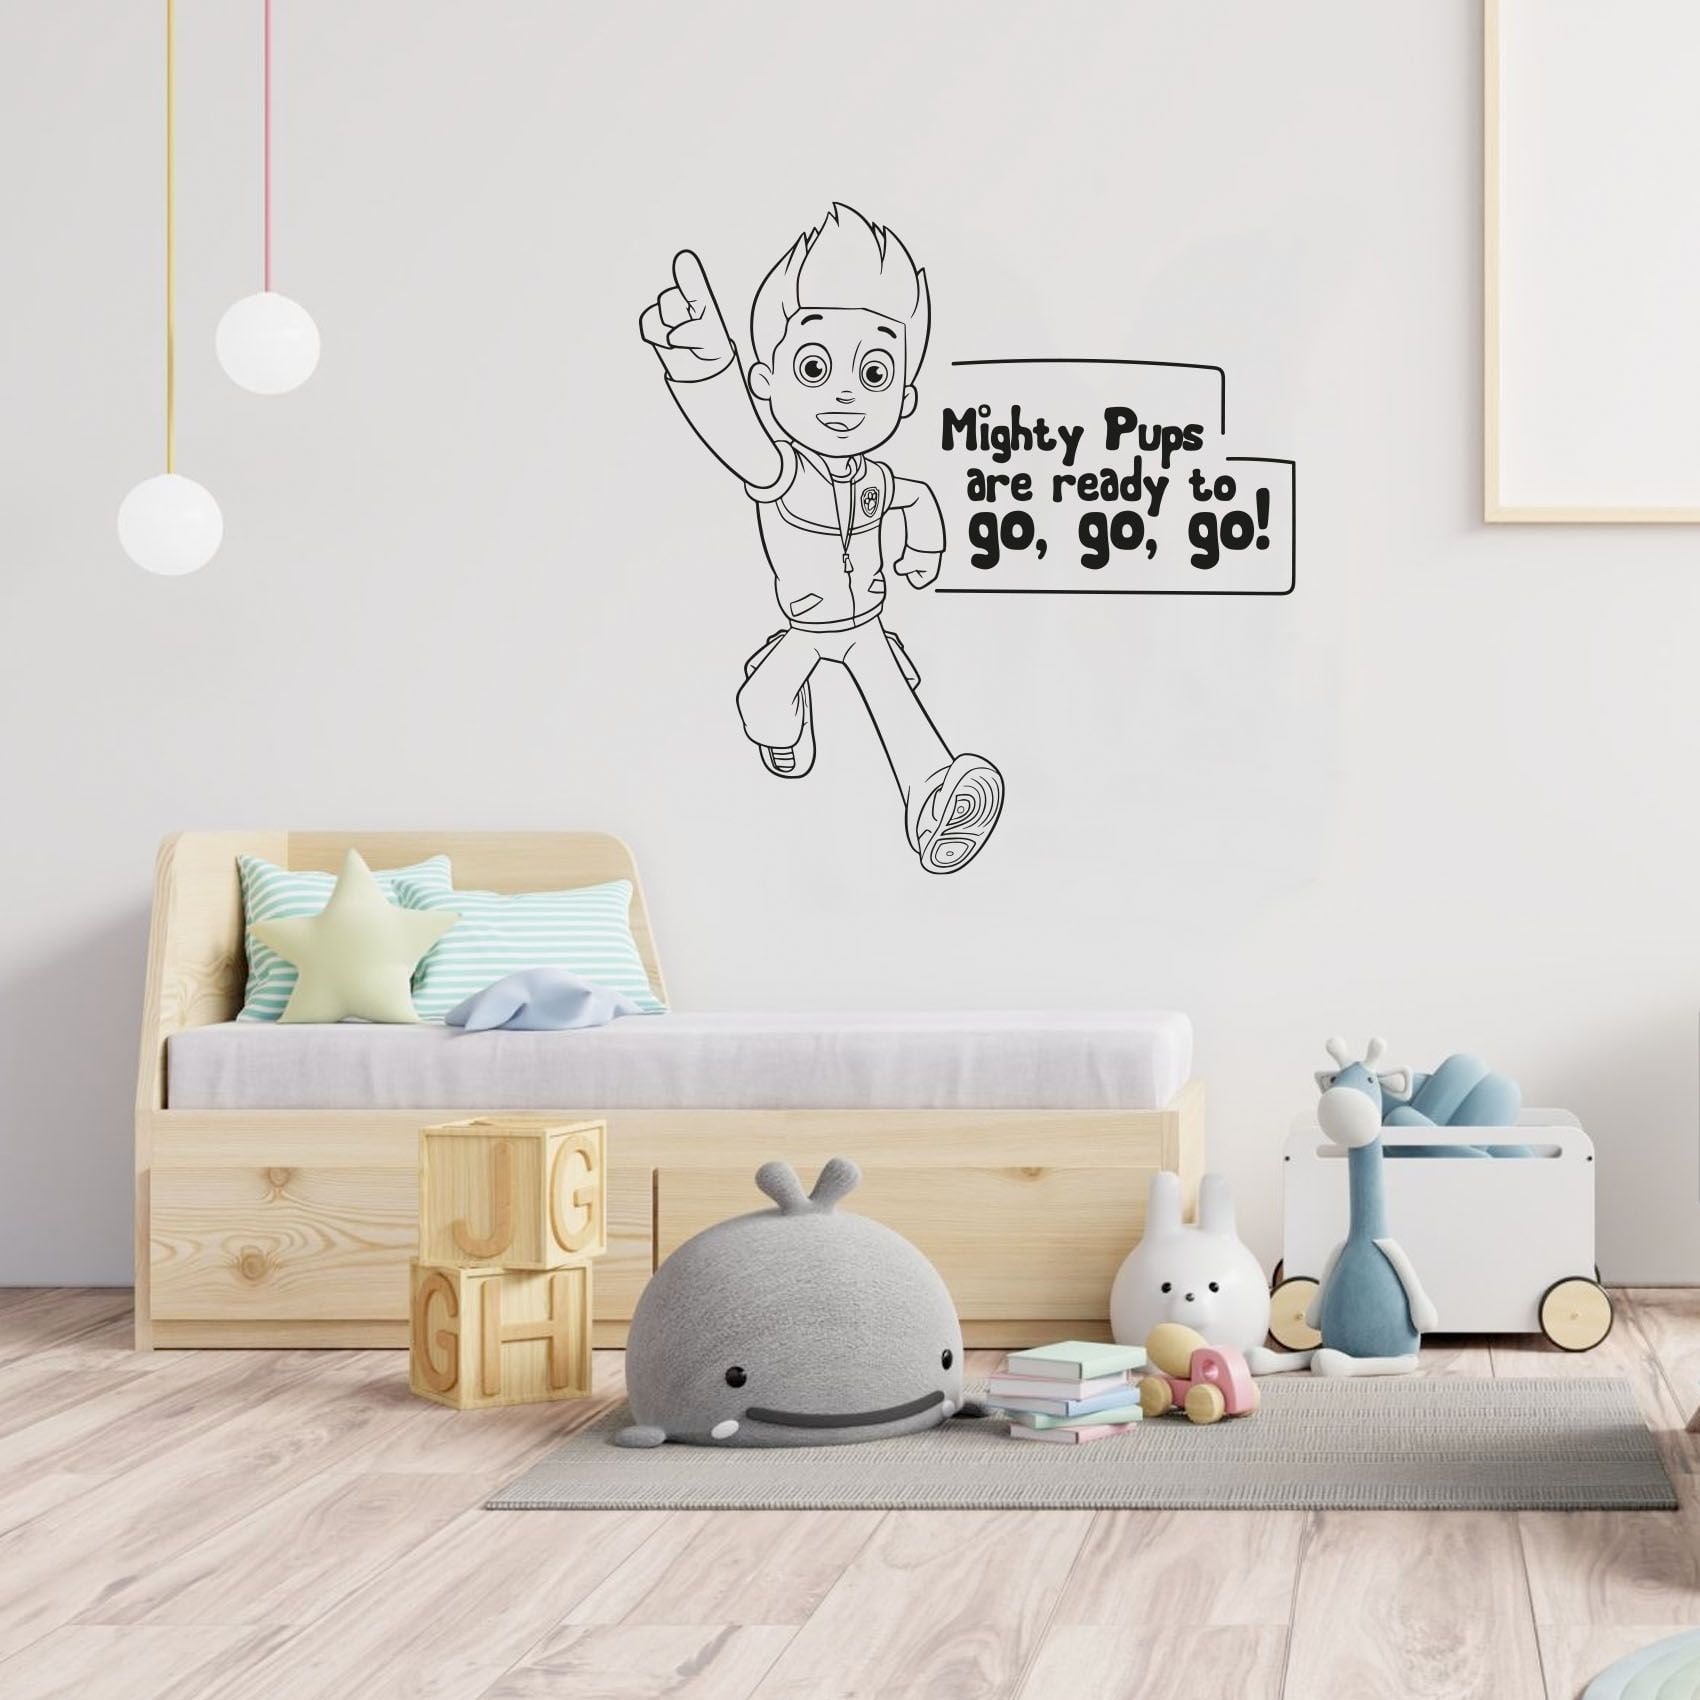 Once Upon a Time Prince Sebastian Wall Sticker Bed Room Nursery Art Boy/Baby 